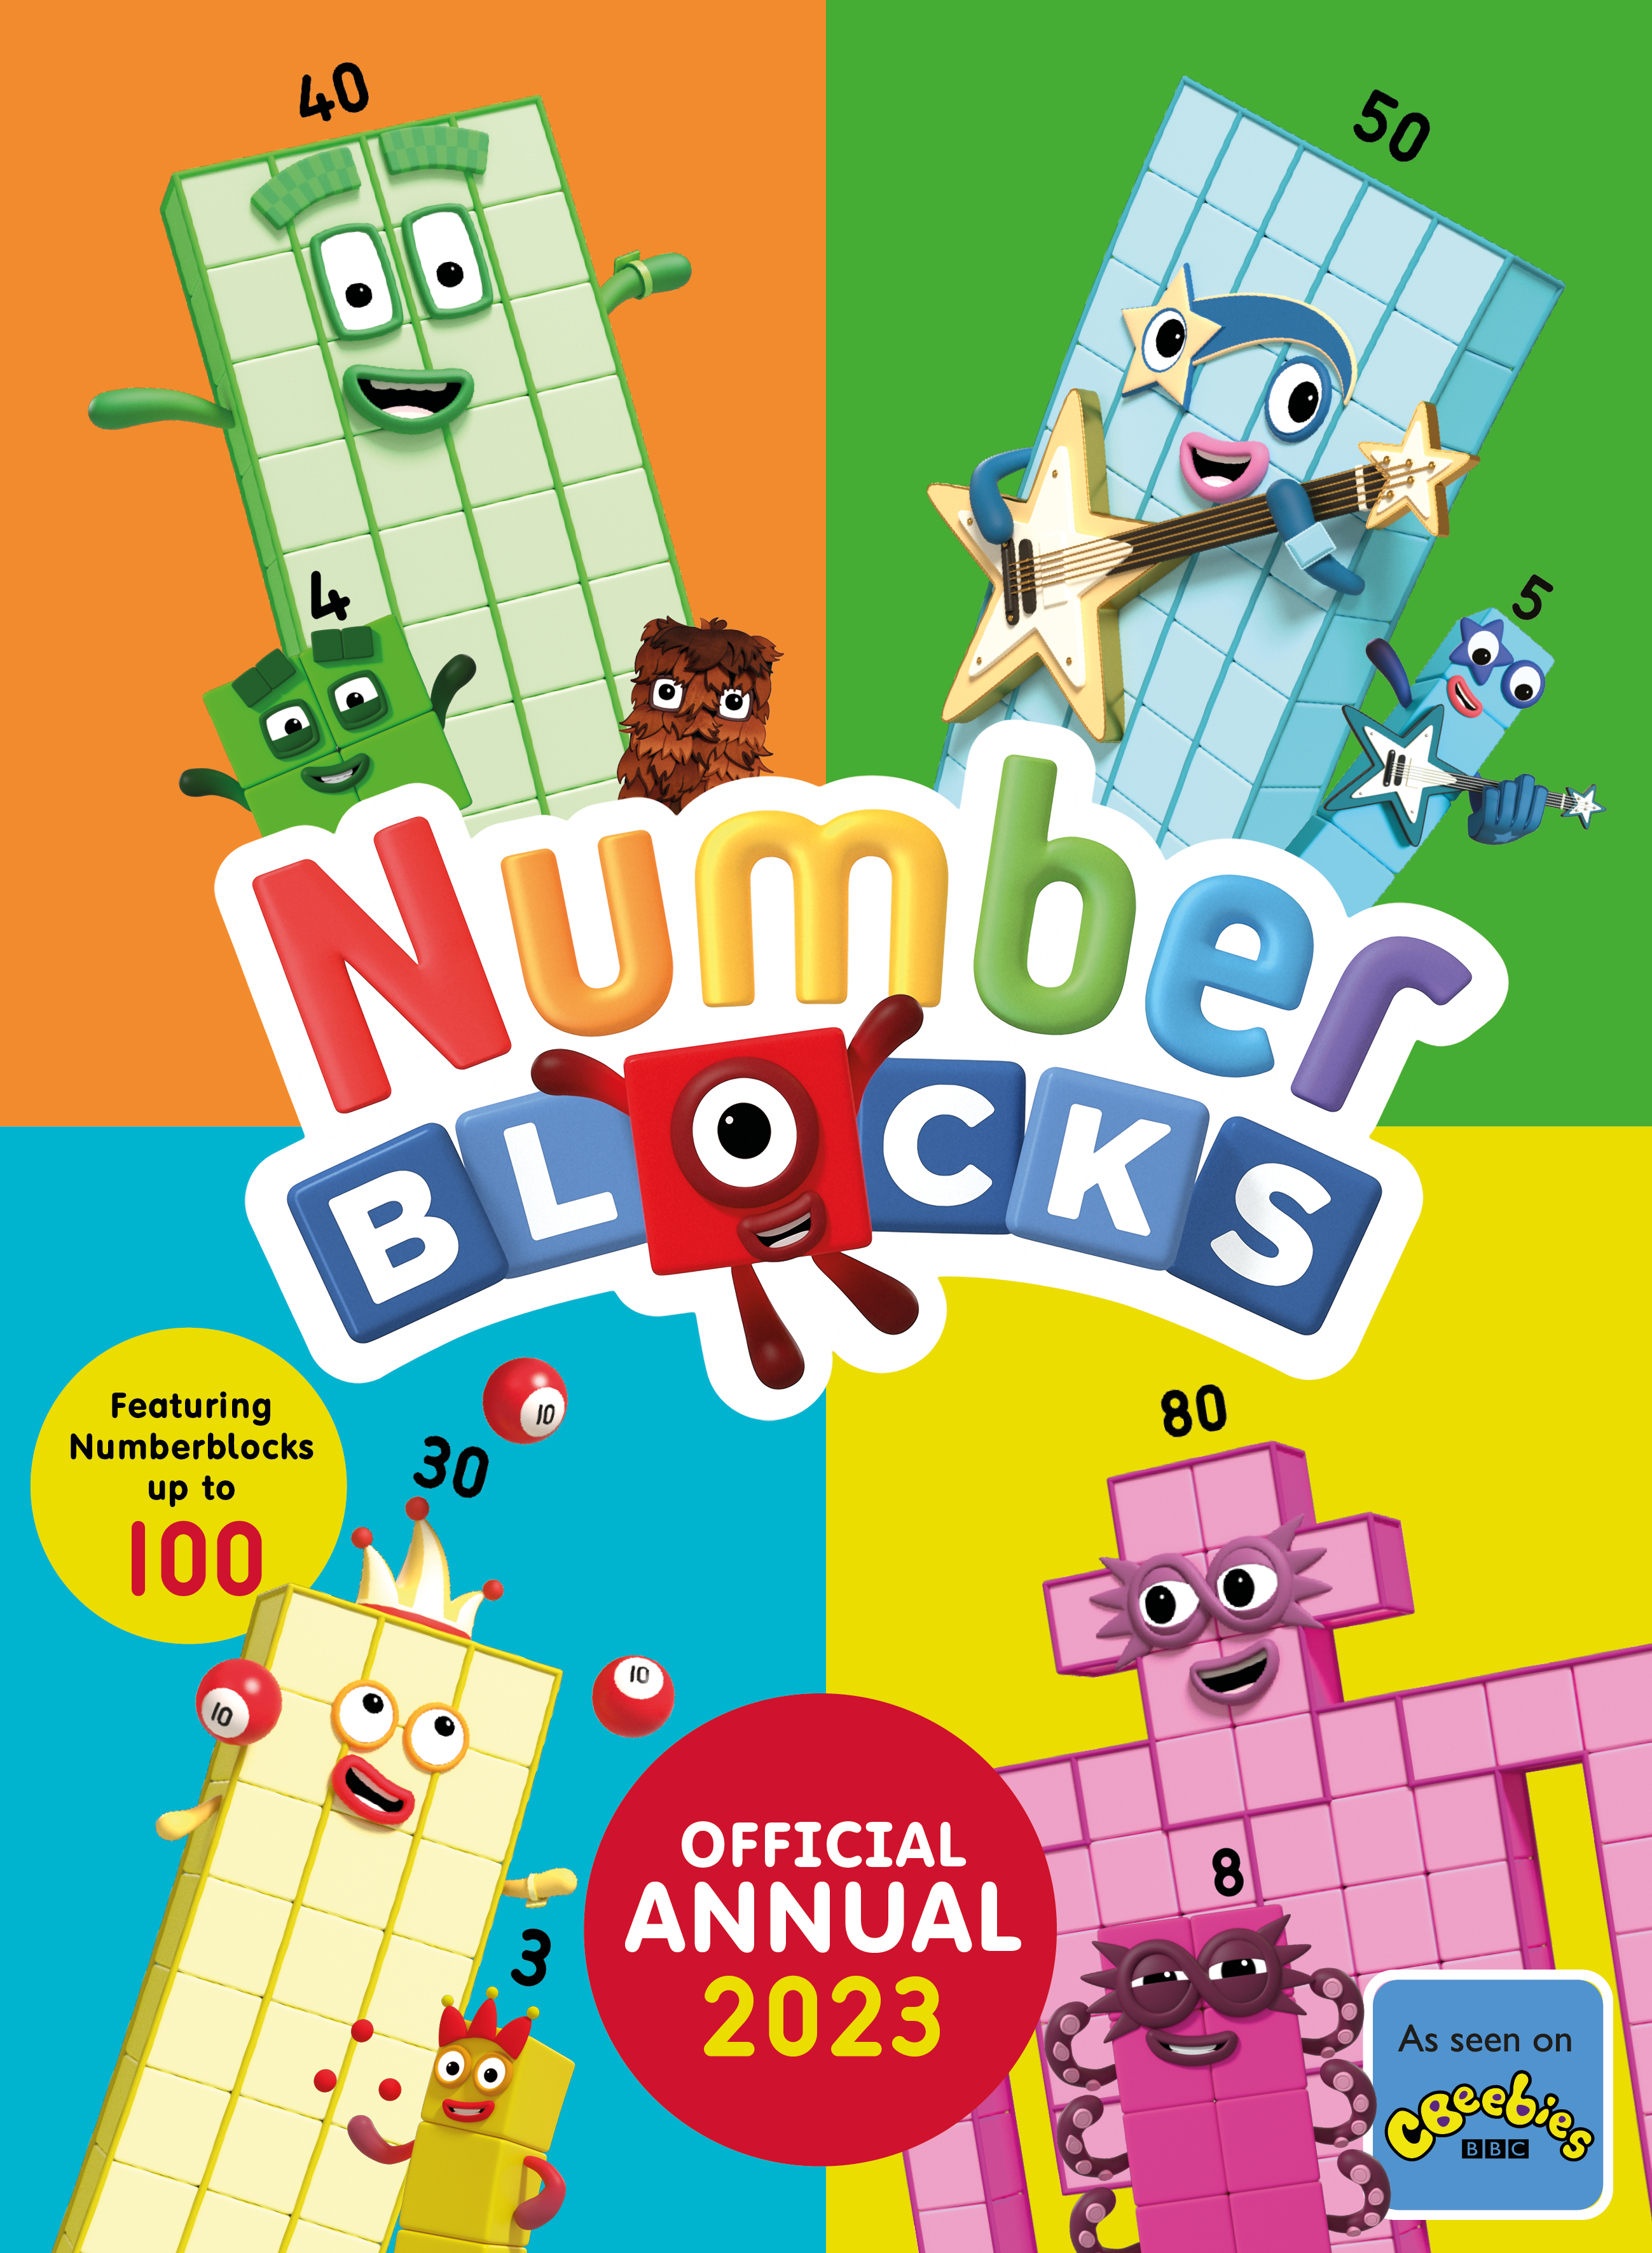 NUMBERBLOCKS RAINBOW BUS - The Toy Book